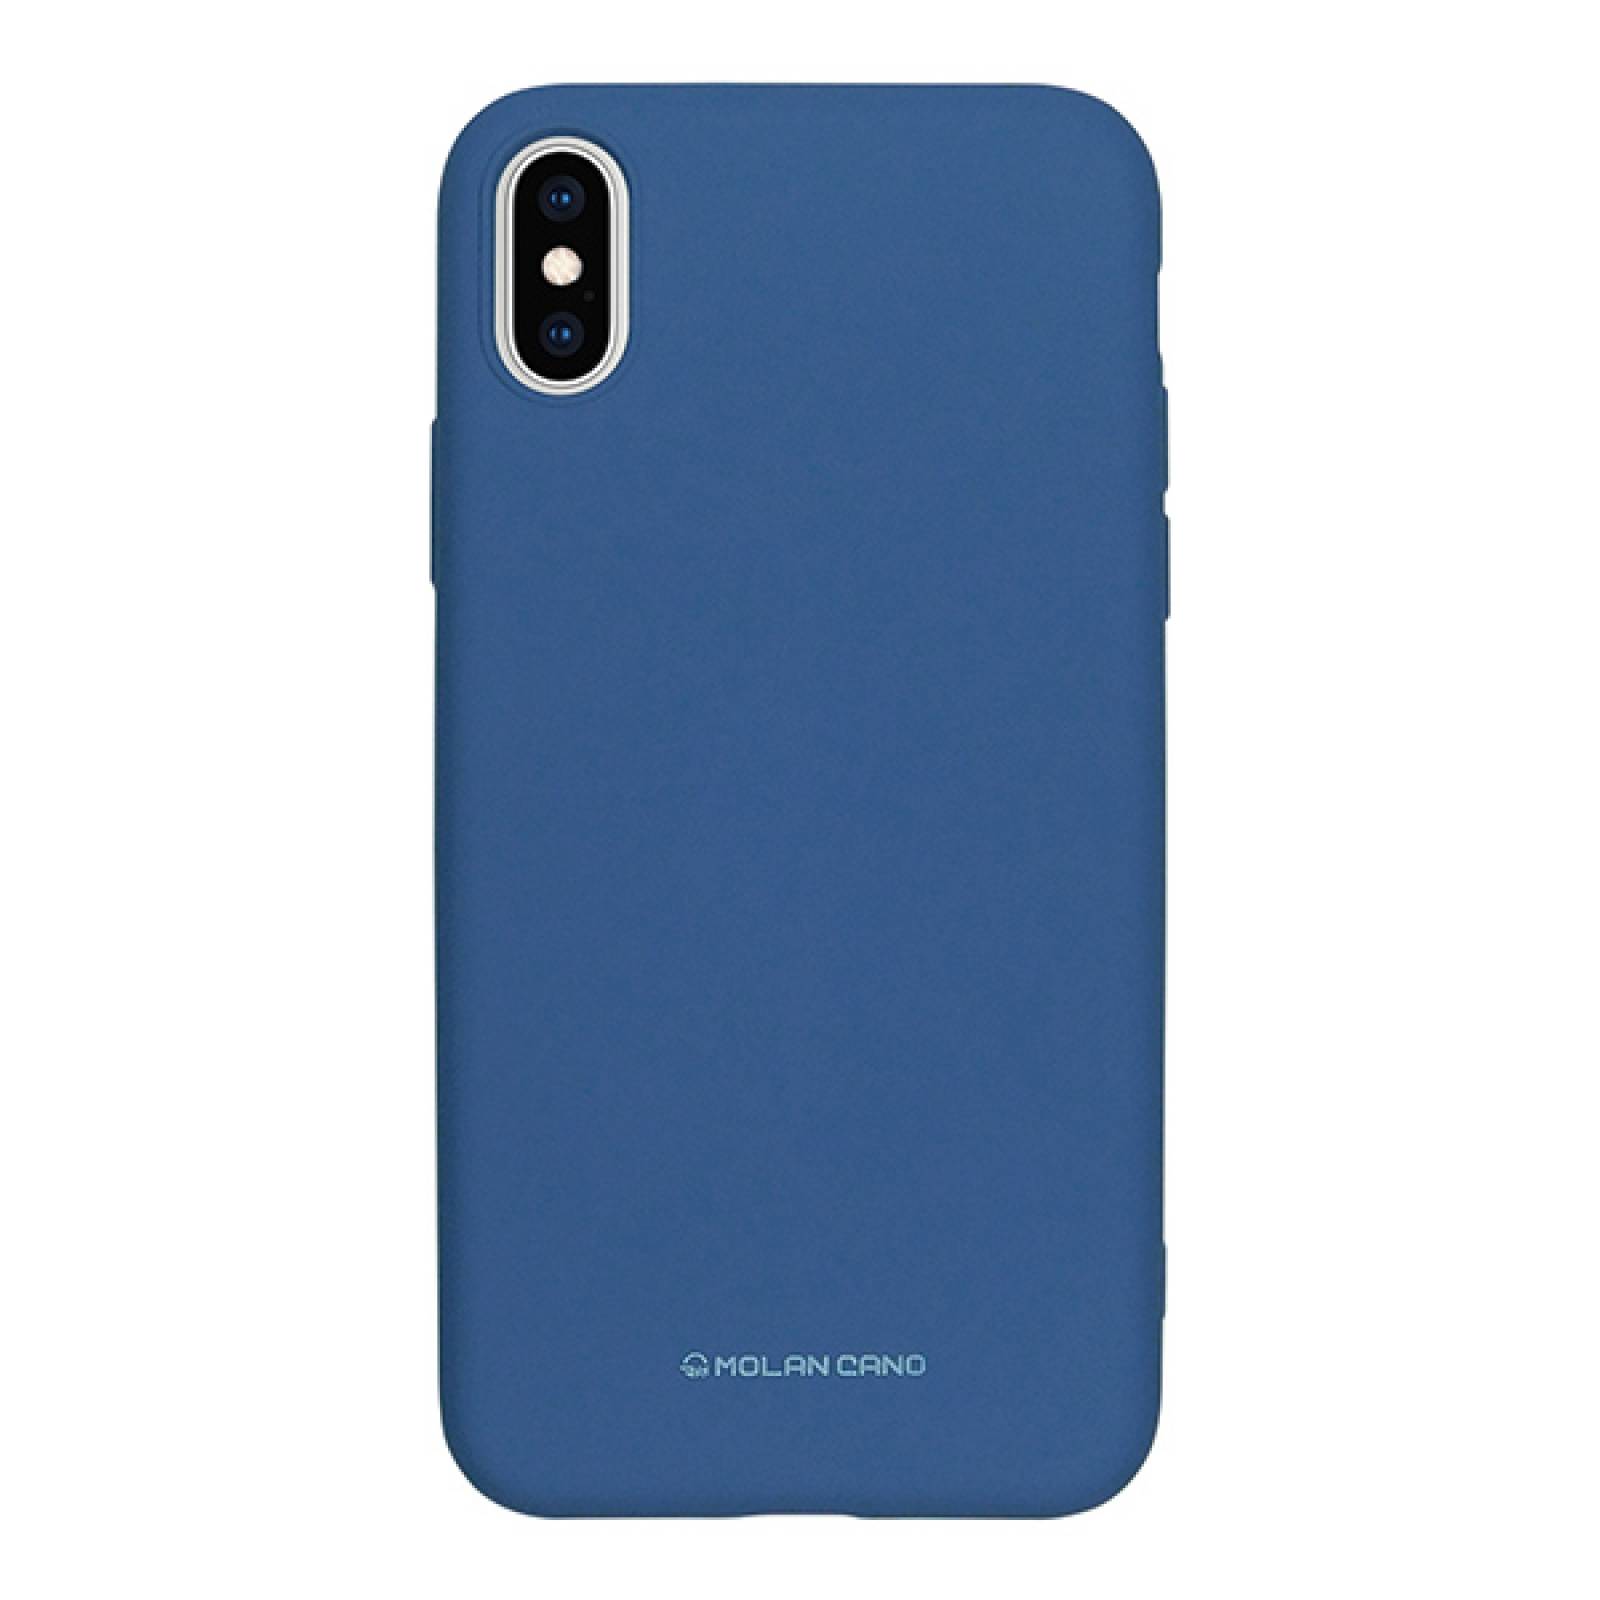 Funda suave para iPhone X / XS azul